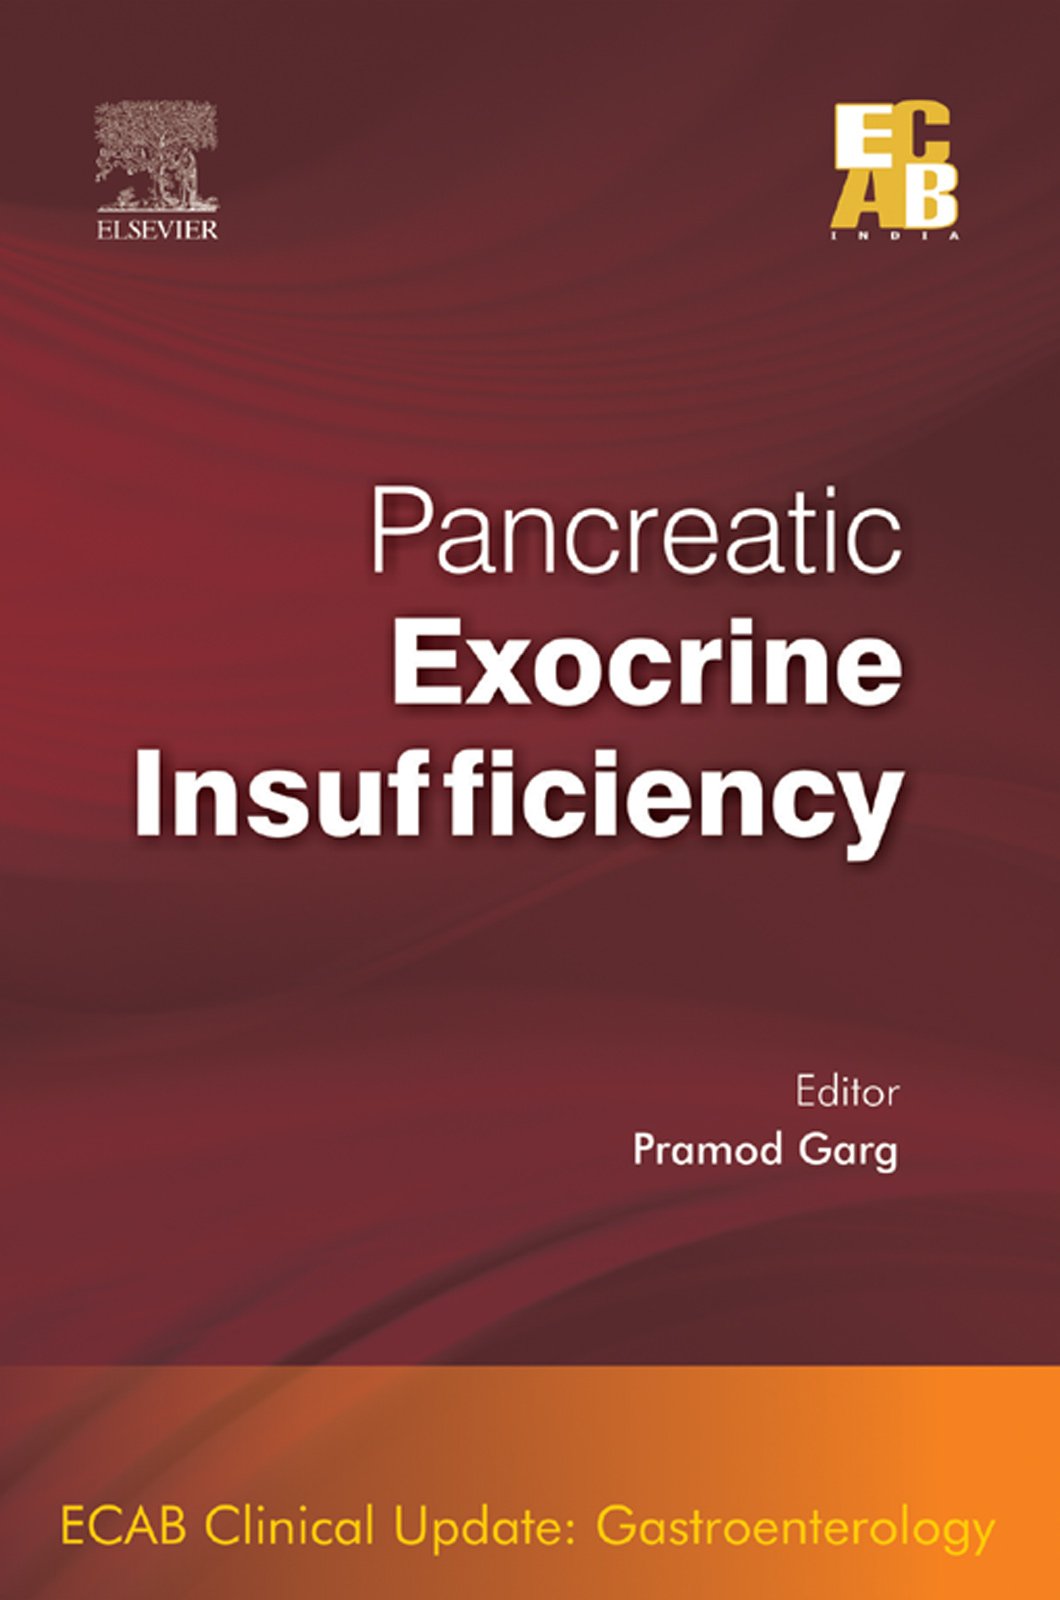 Pancreatic Exocrine Insufficiency - ECAB